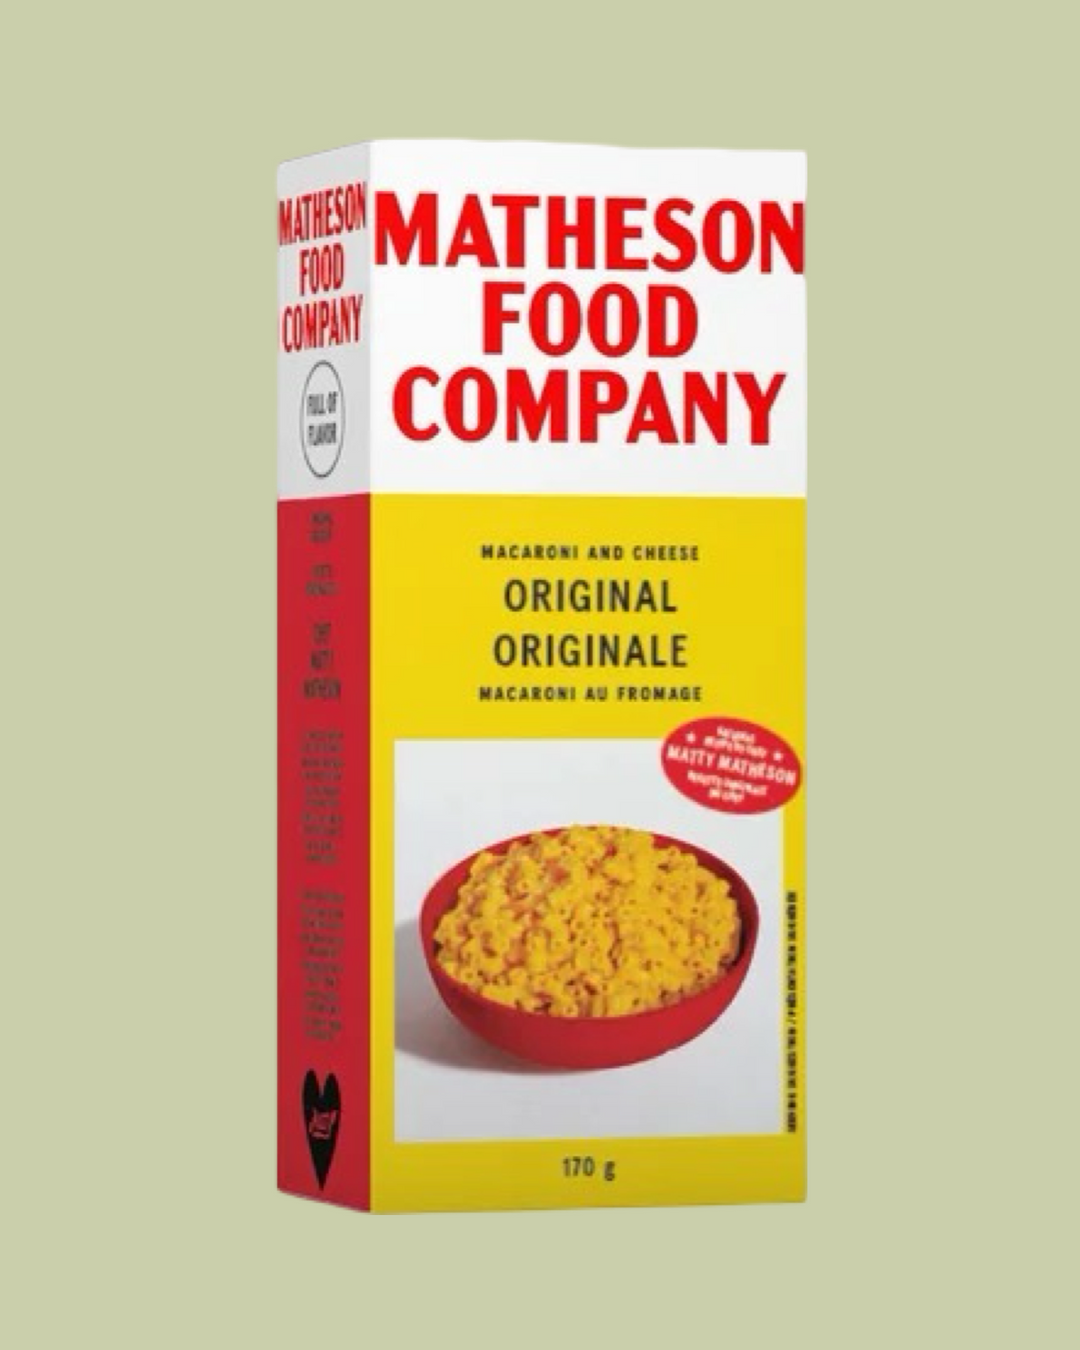 Matheson Macaroni and Cheese Original